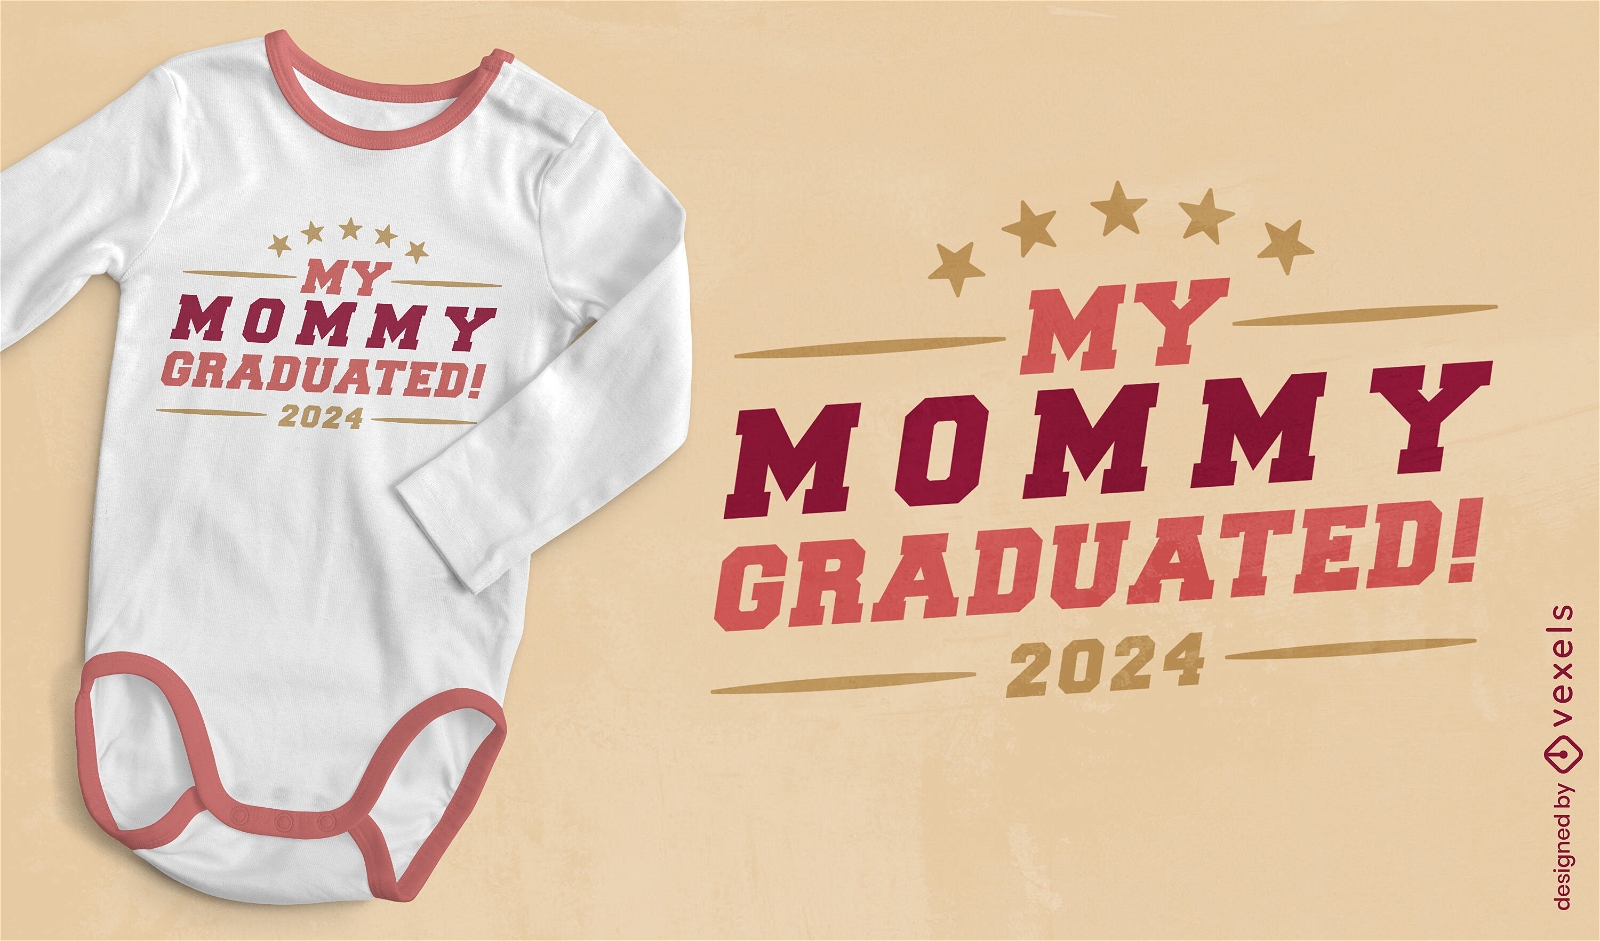 Mommy graduation joy t-shirt design